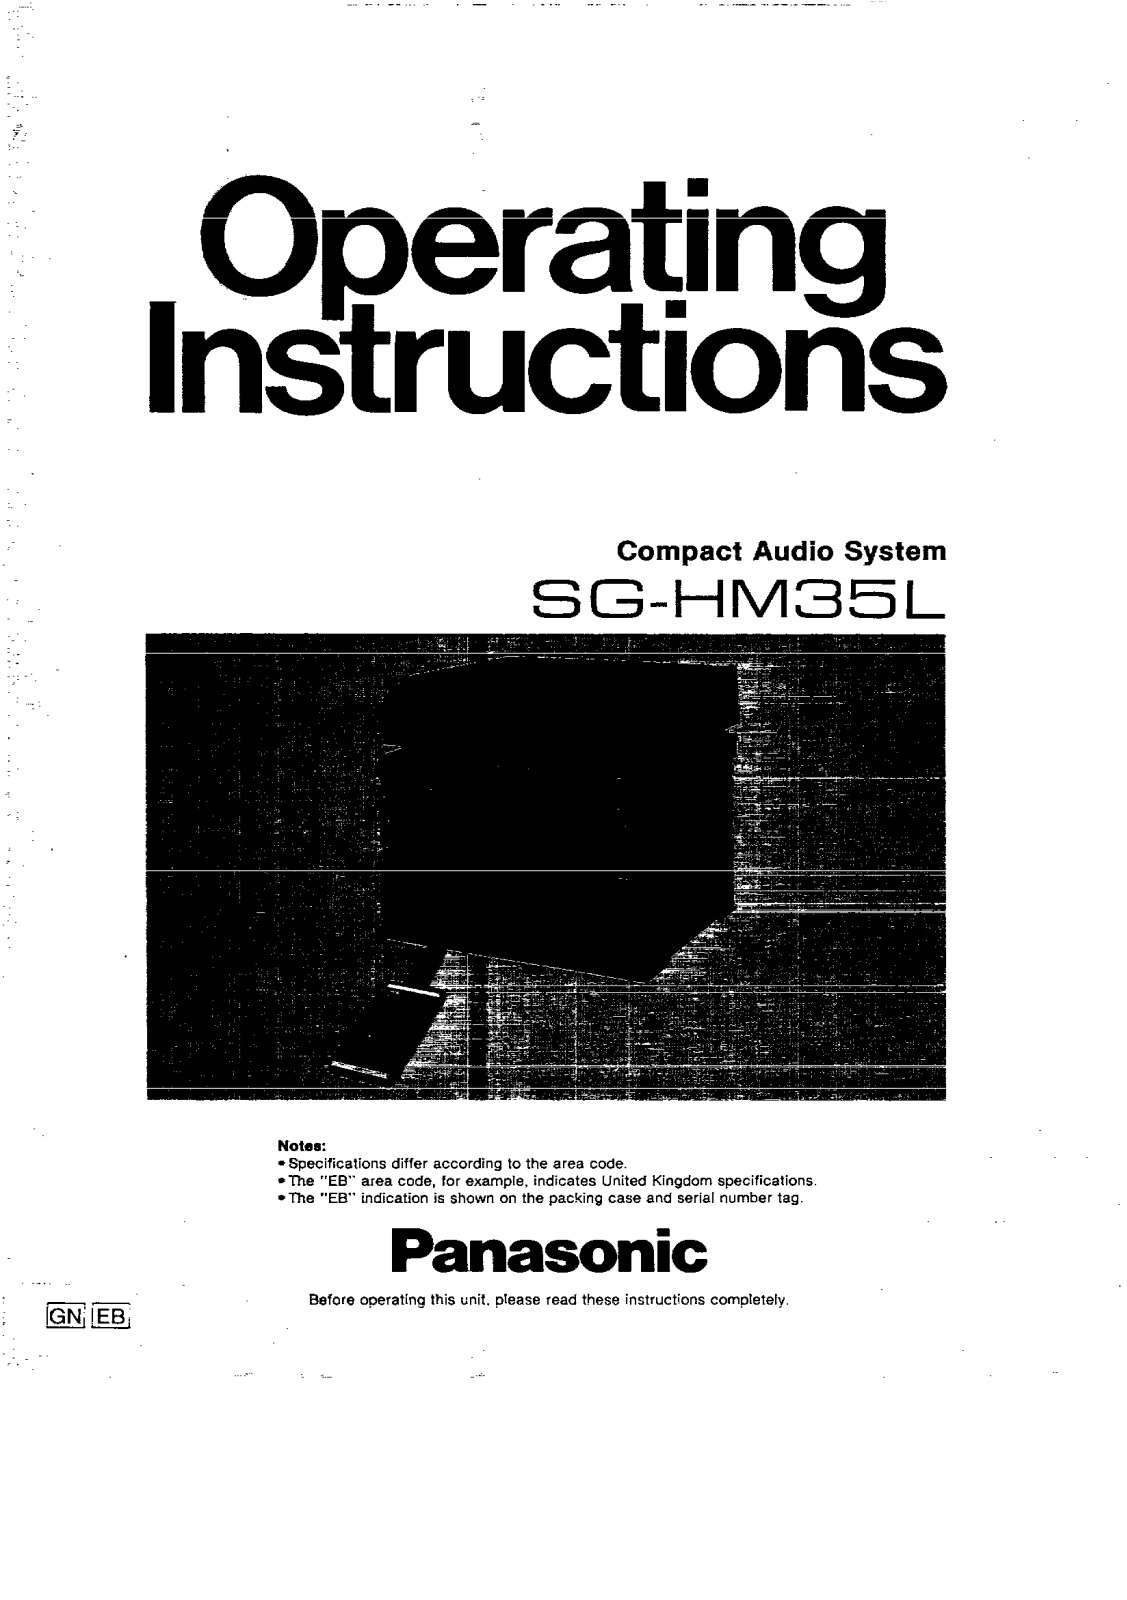 Panasonic SG-HM35L User Manual